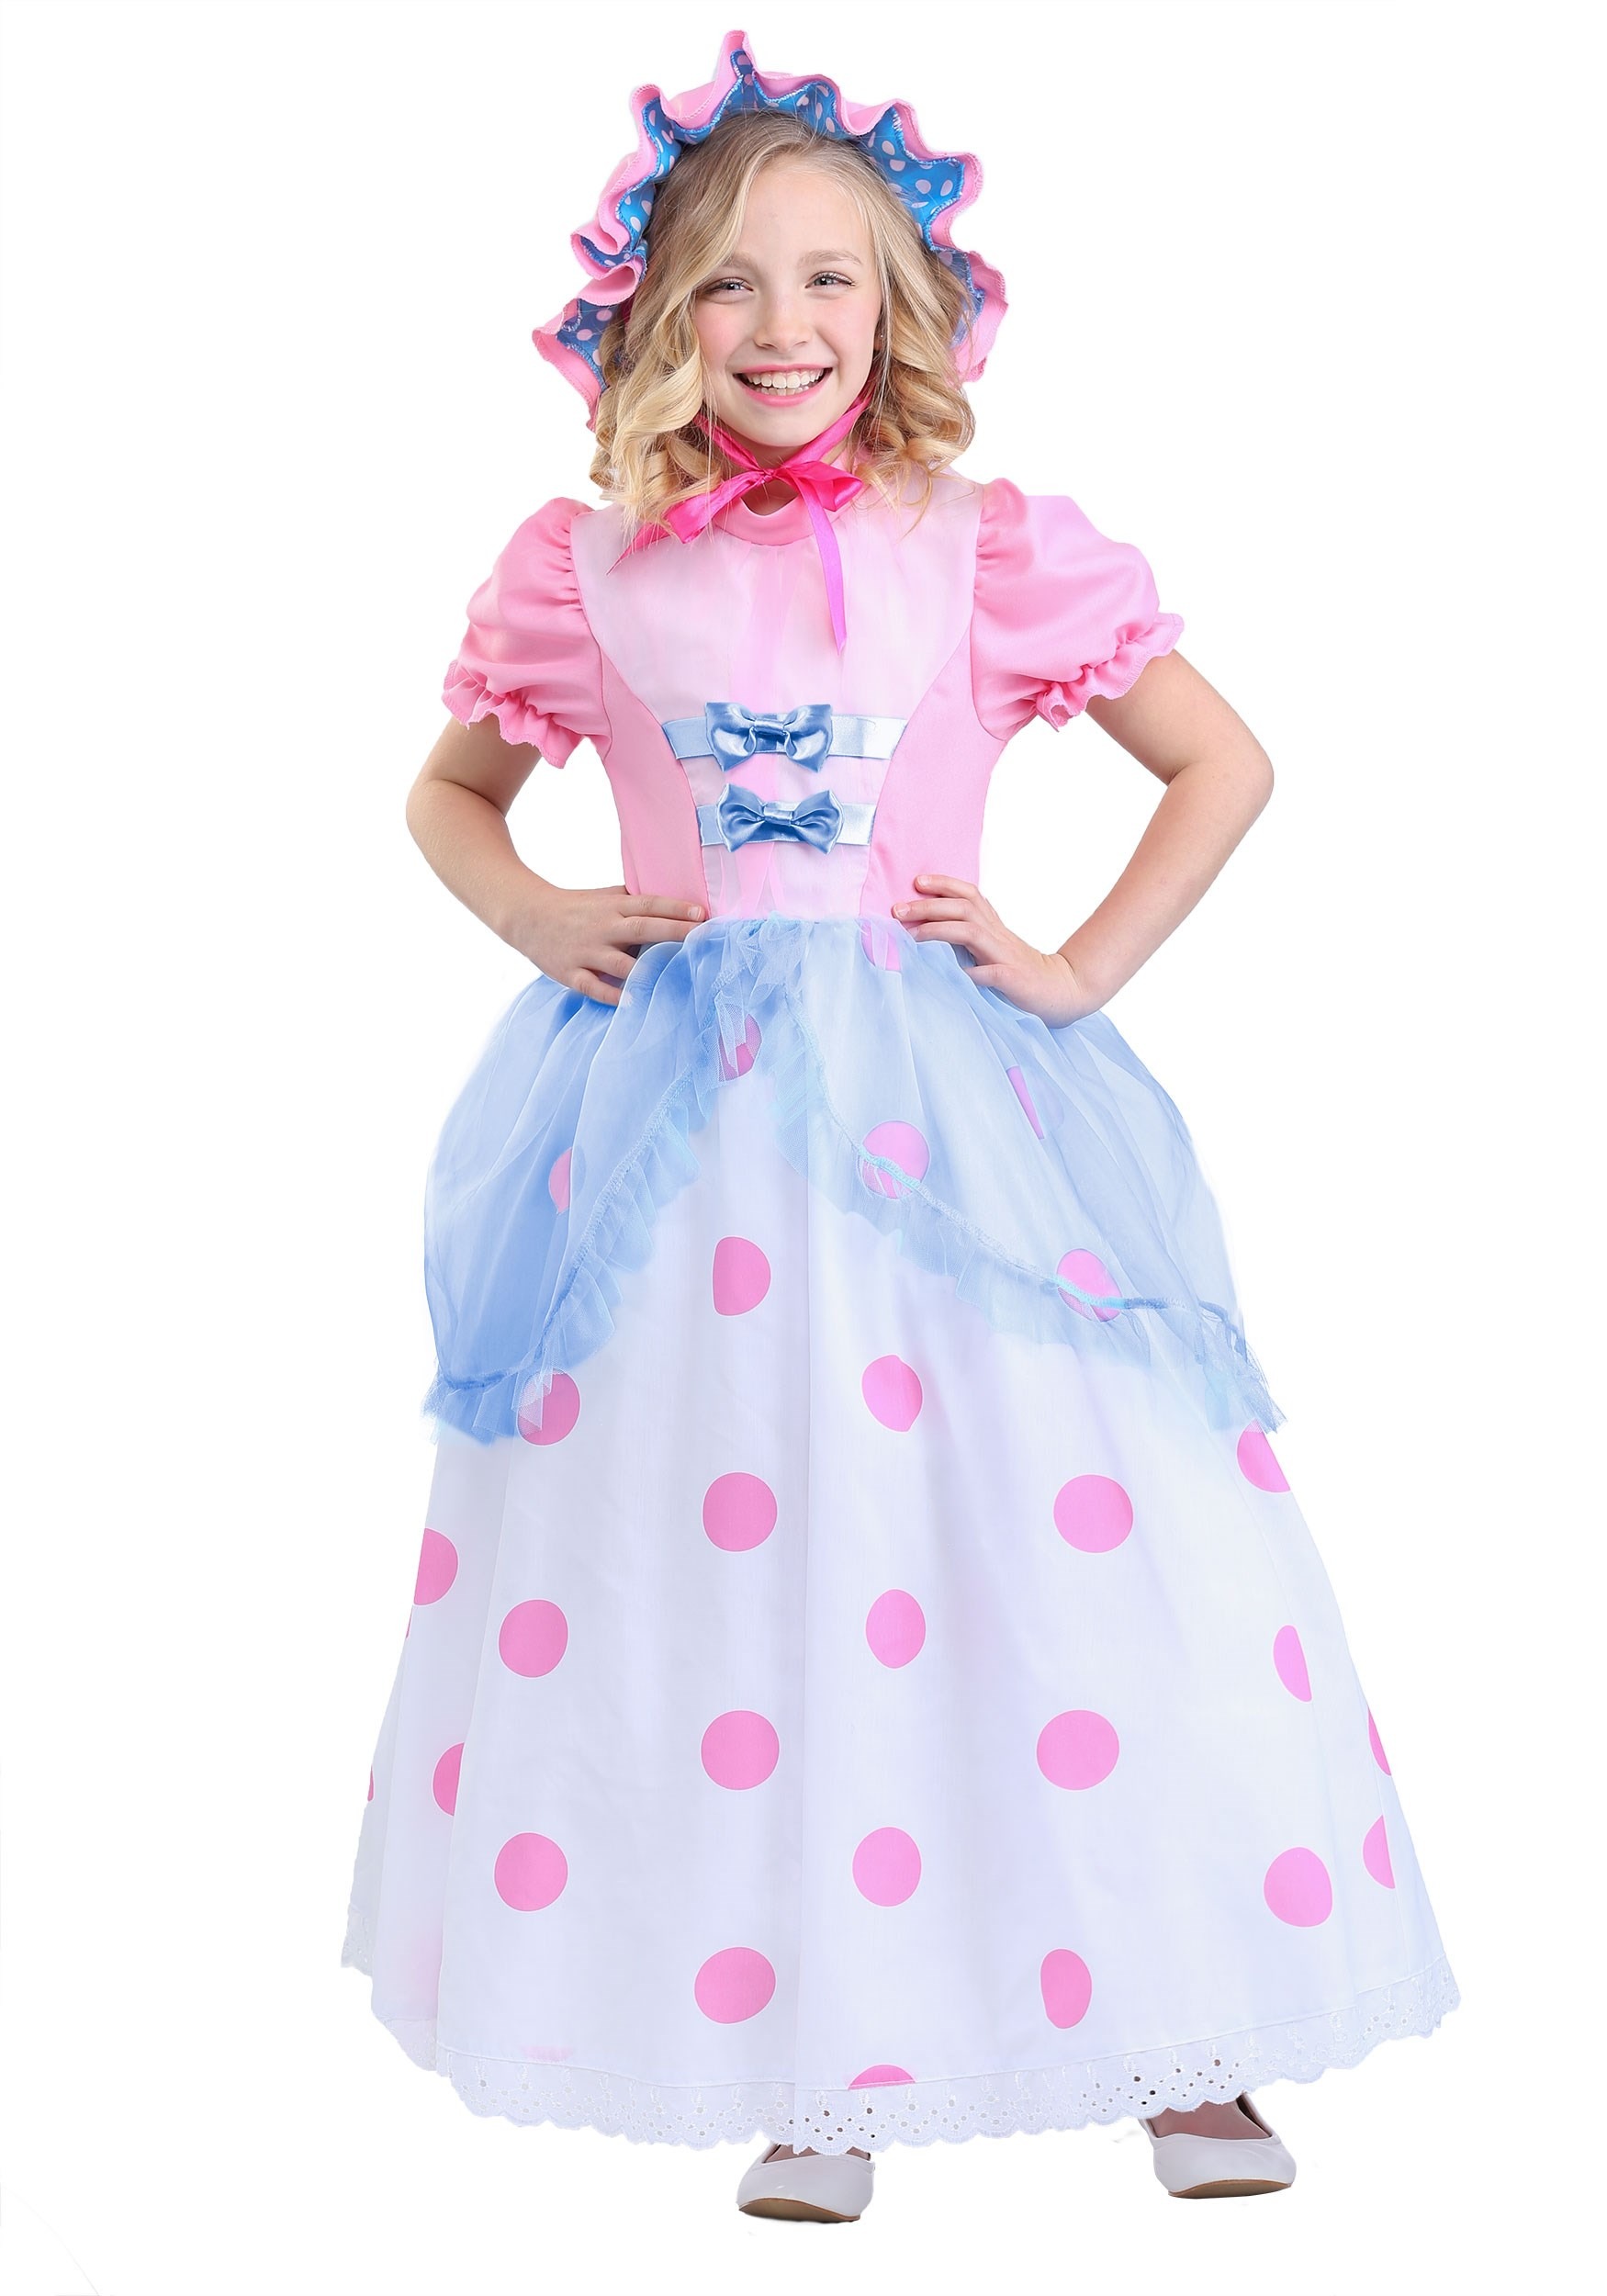 Photos - Fancy Dress FUN Costumes Bo Peep Girl's Costume Blue/Pink/White FUN6869CH